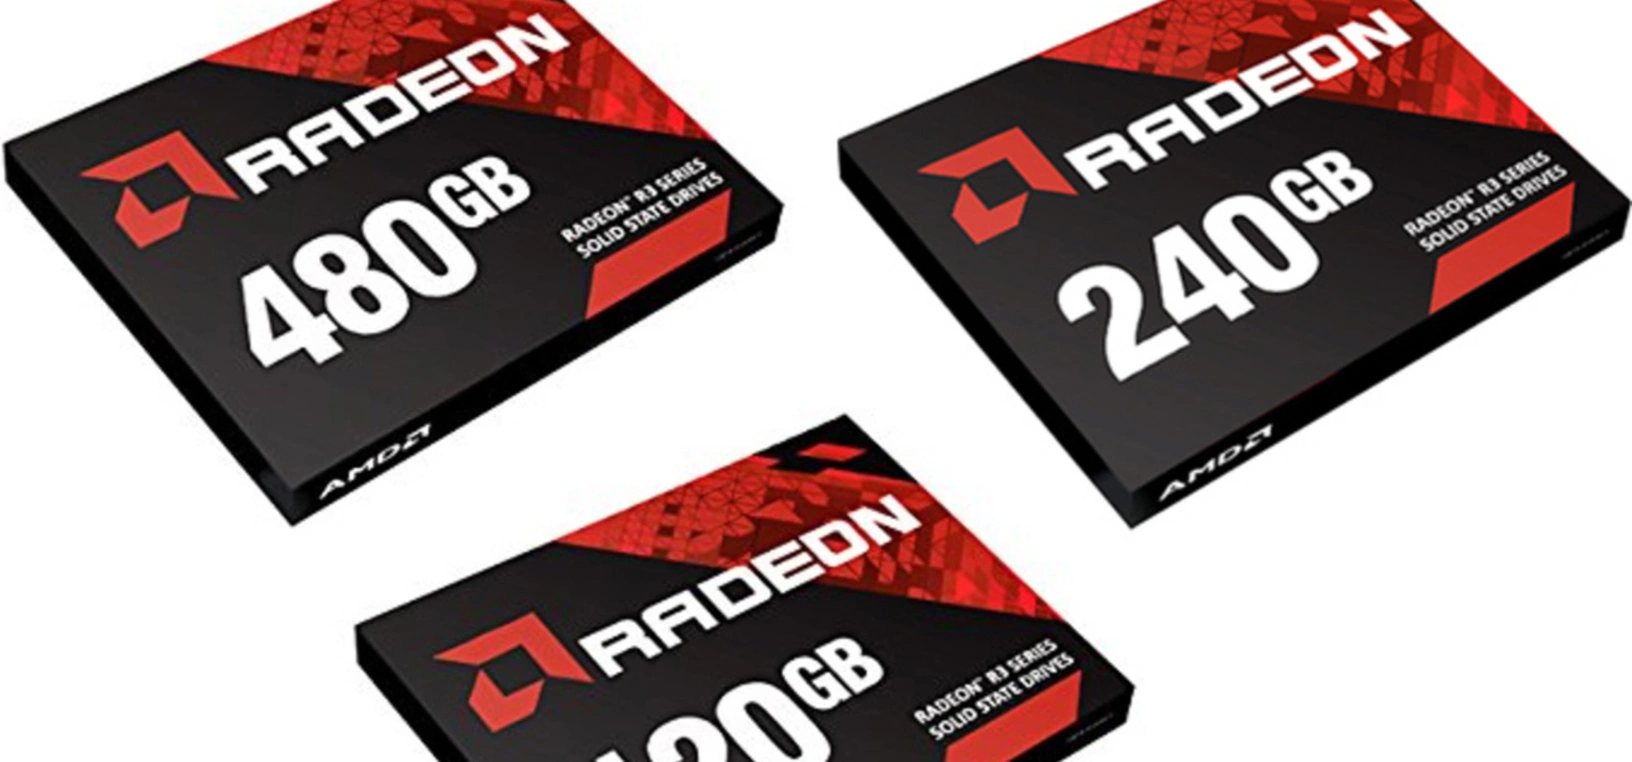 Ssd price. SSD AMD 120gb. Ссд радеон 120 ГБ. SSD AMD Radeon r5 256gb. SSD АМД радеон.